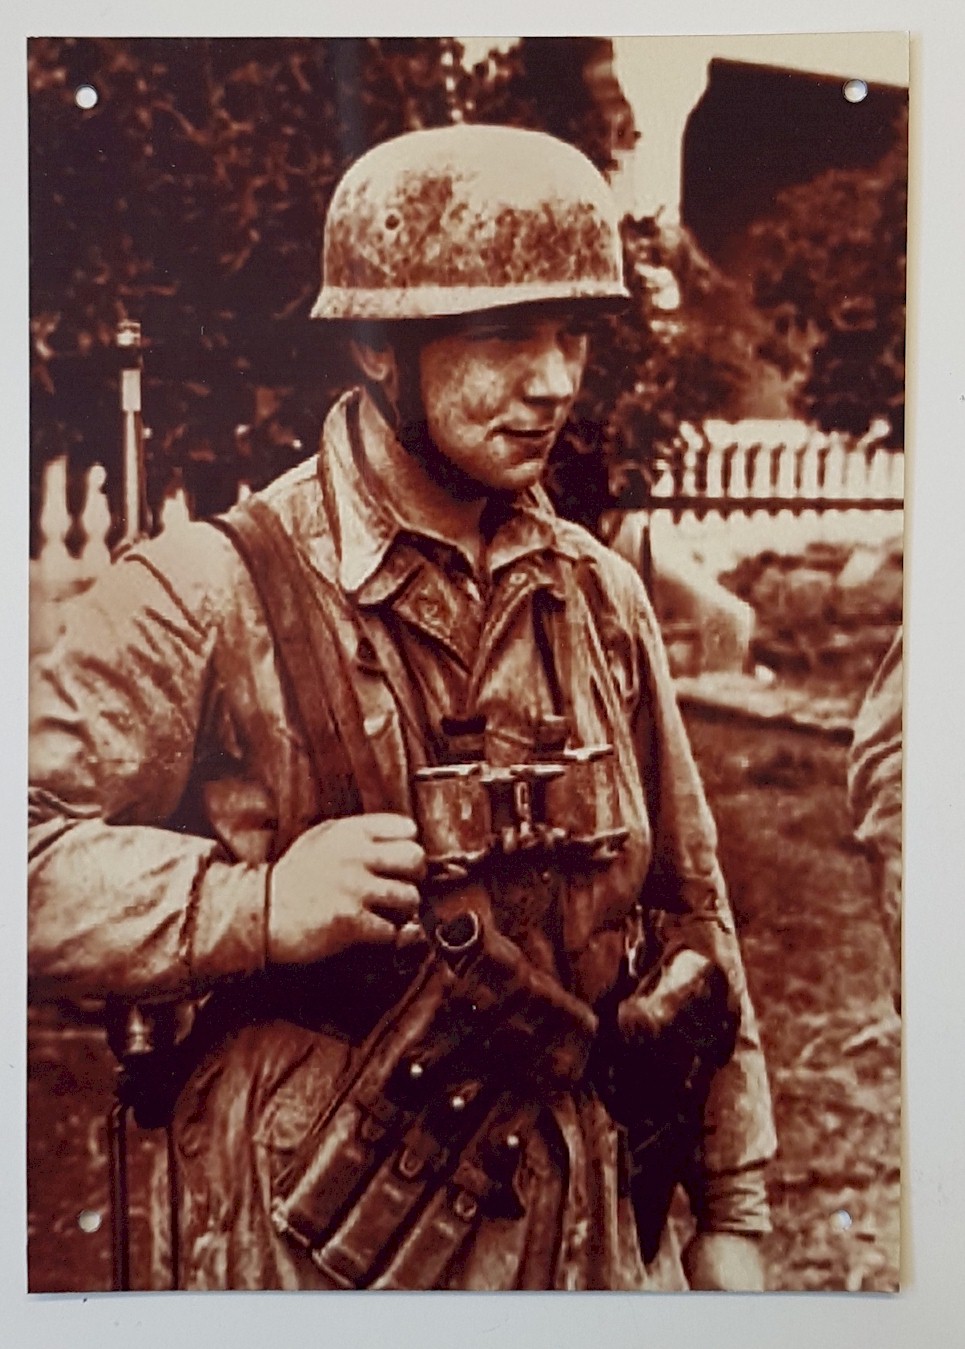 GERMAN FALLSCHIMJAGER SOLDIER WITH BINOCULARS AND LUGER PISTOL METAL SIGN